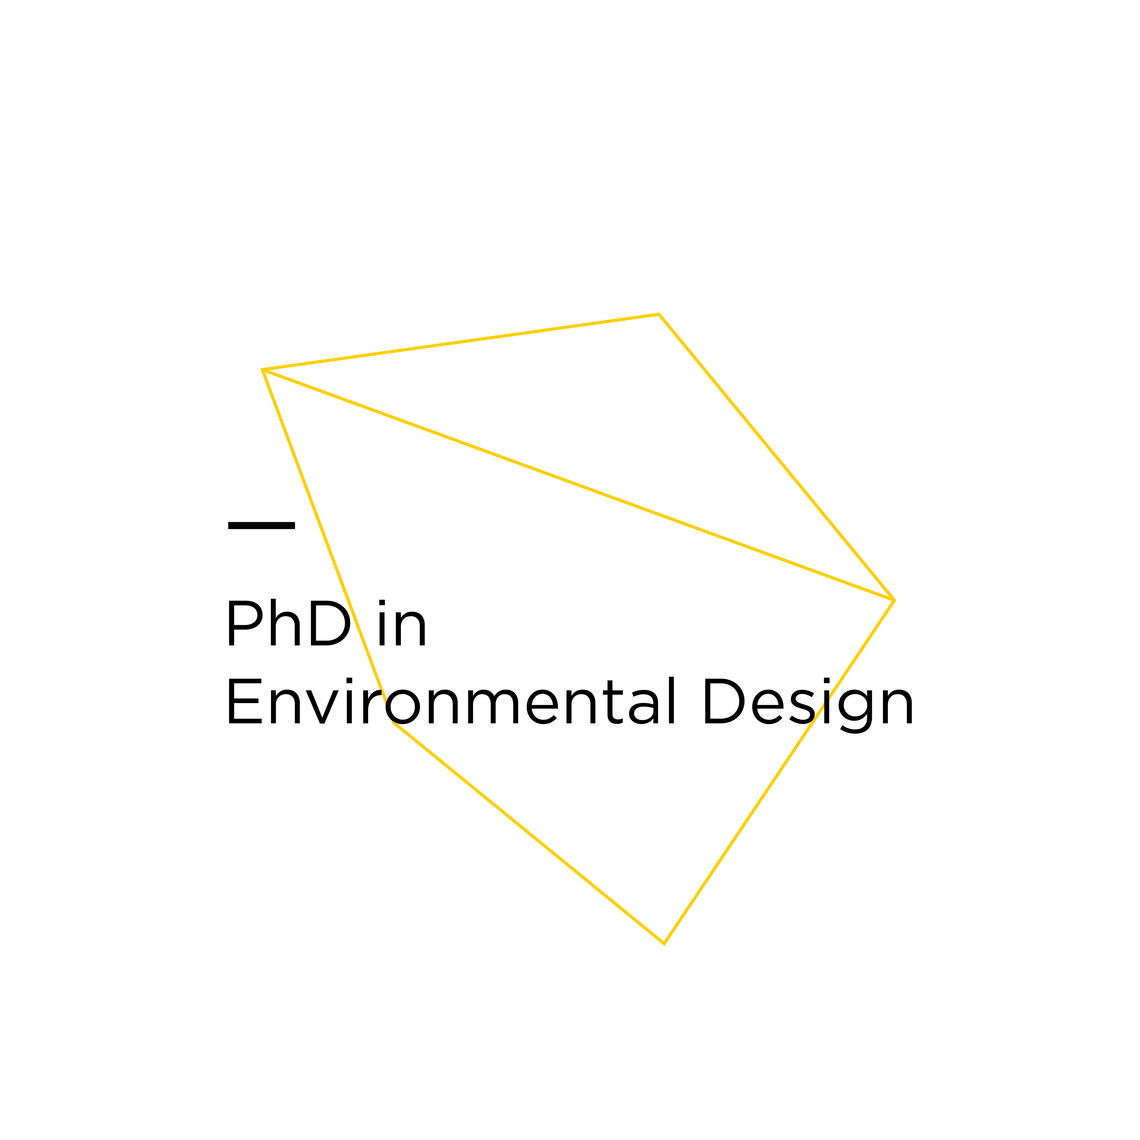 PhD in Environmental Design